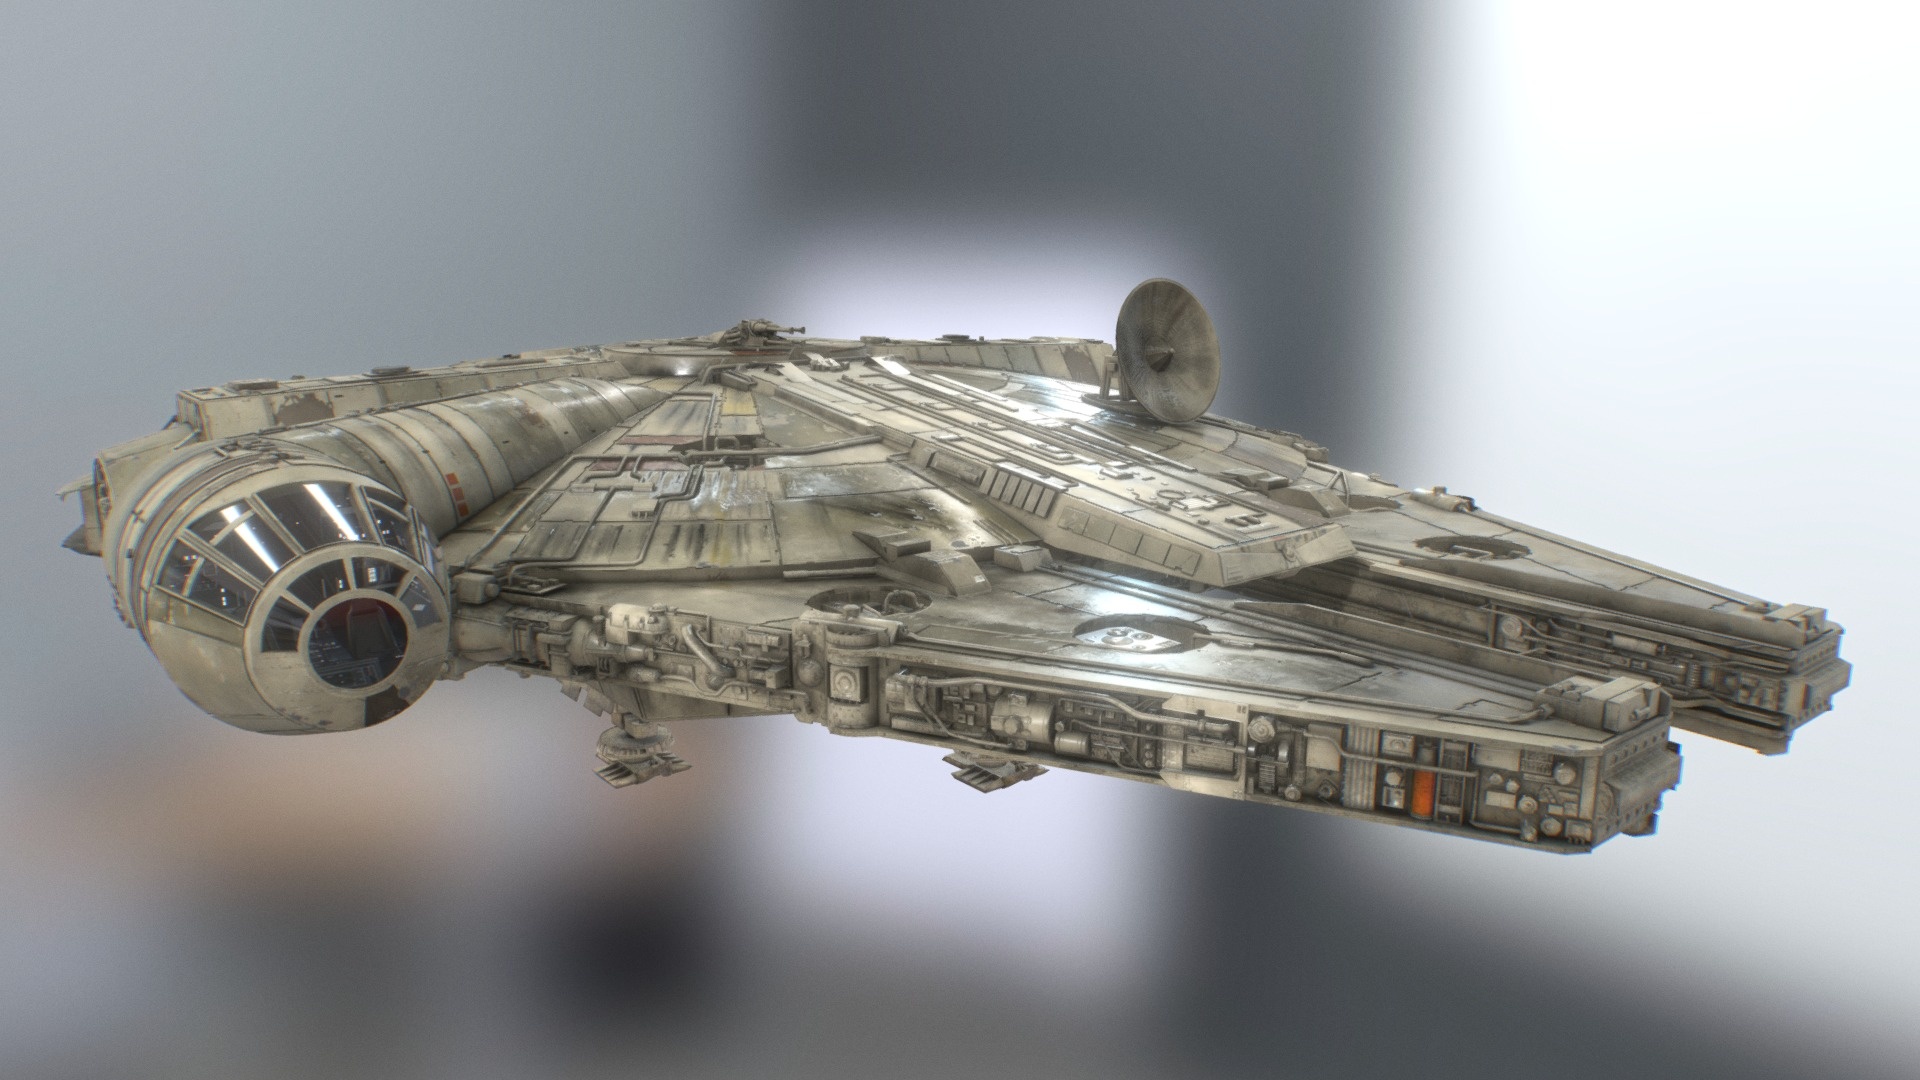 Millennium Falcon free download, 3D model, Artist: Stym, Star Wars spaceship, 1920x1080 Full HD Desktop